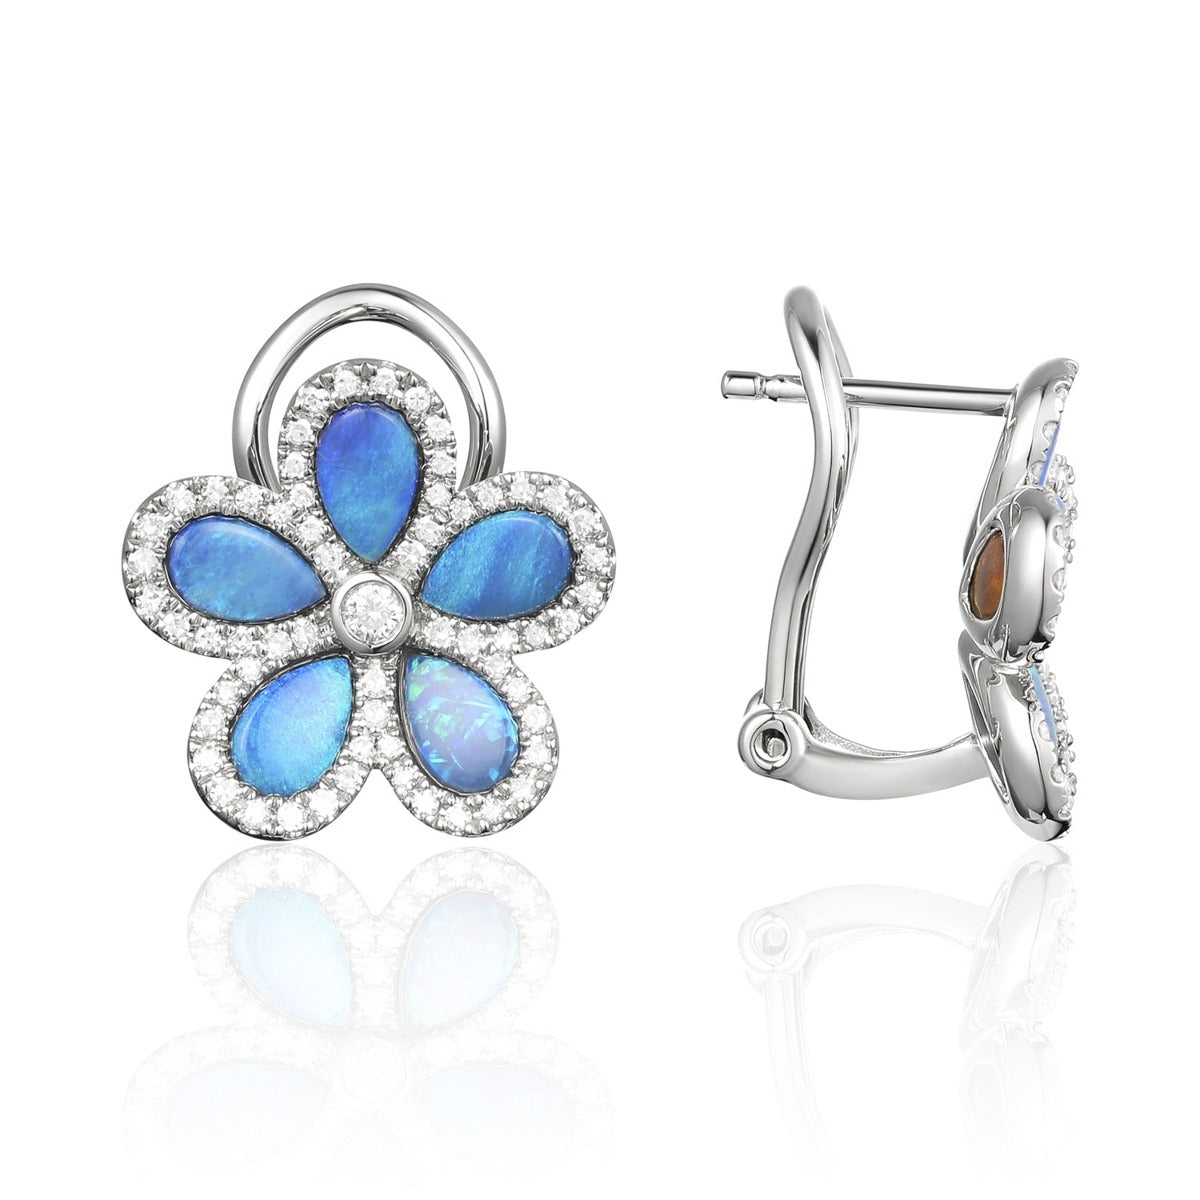 Luvente 14 Karat White Gold Opal and Diamond Flower Stud Earrings - Colored Stone Earrings